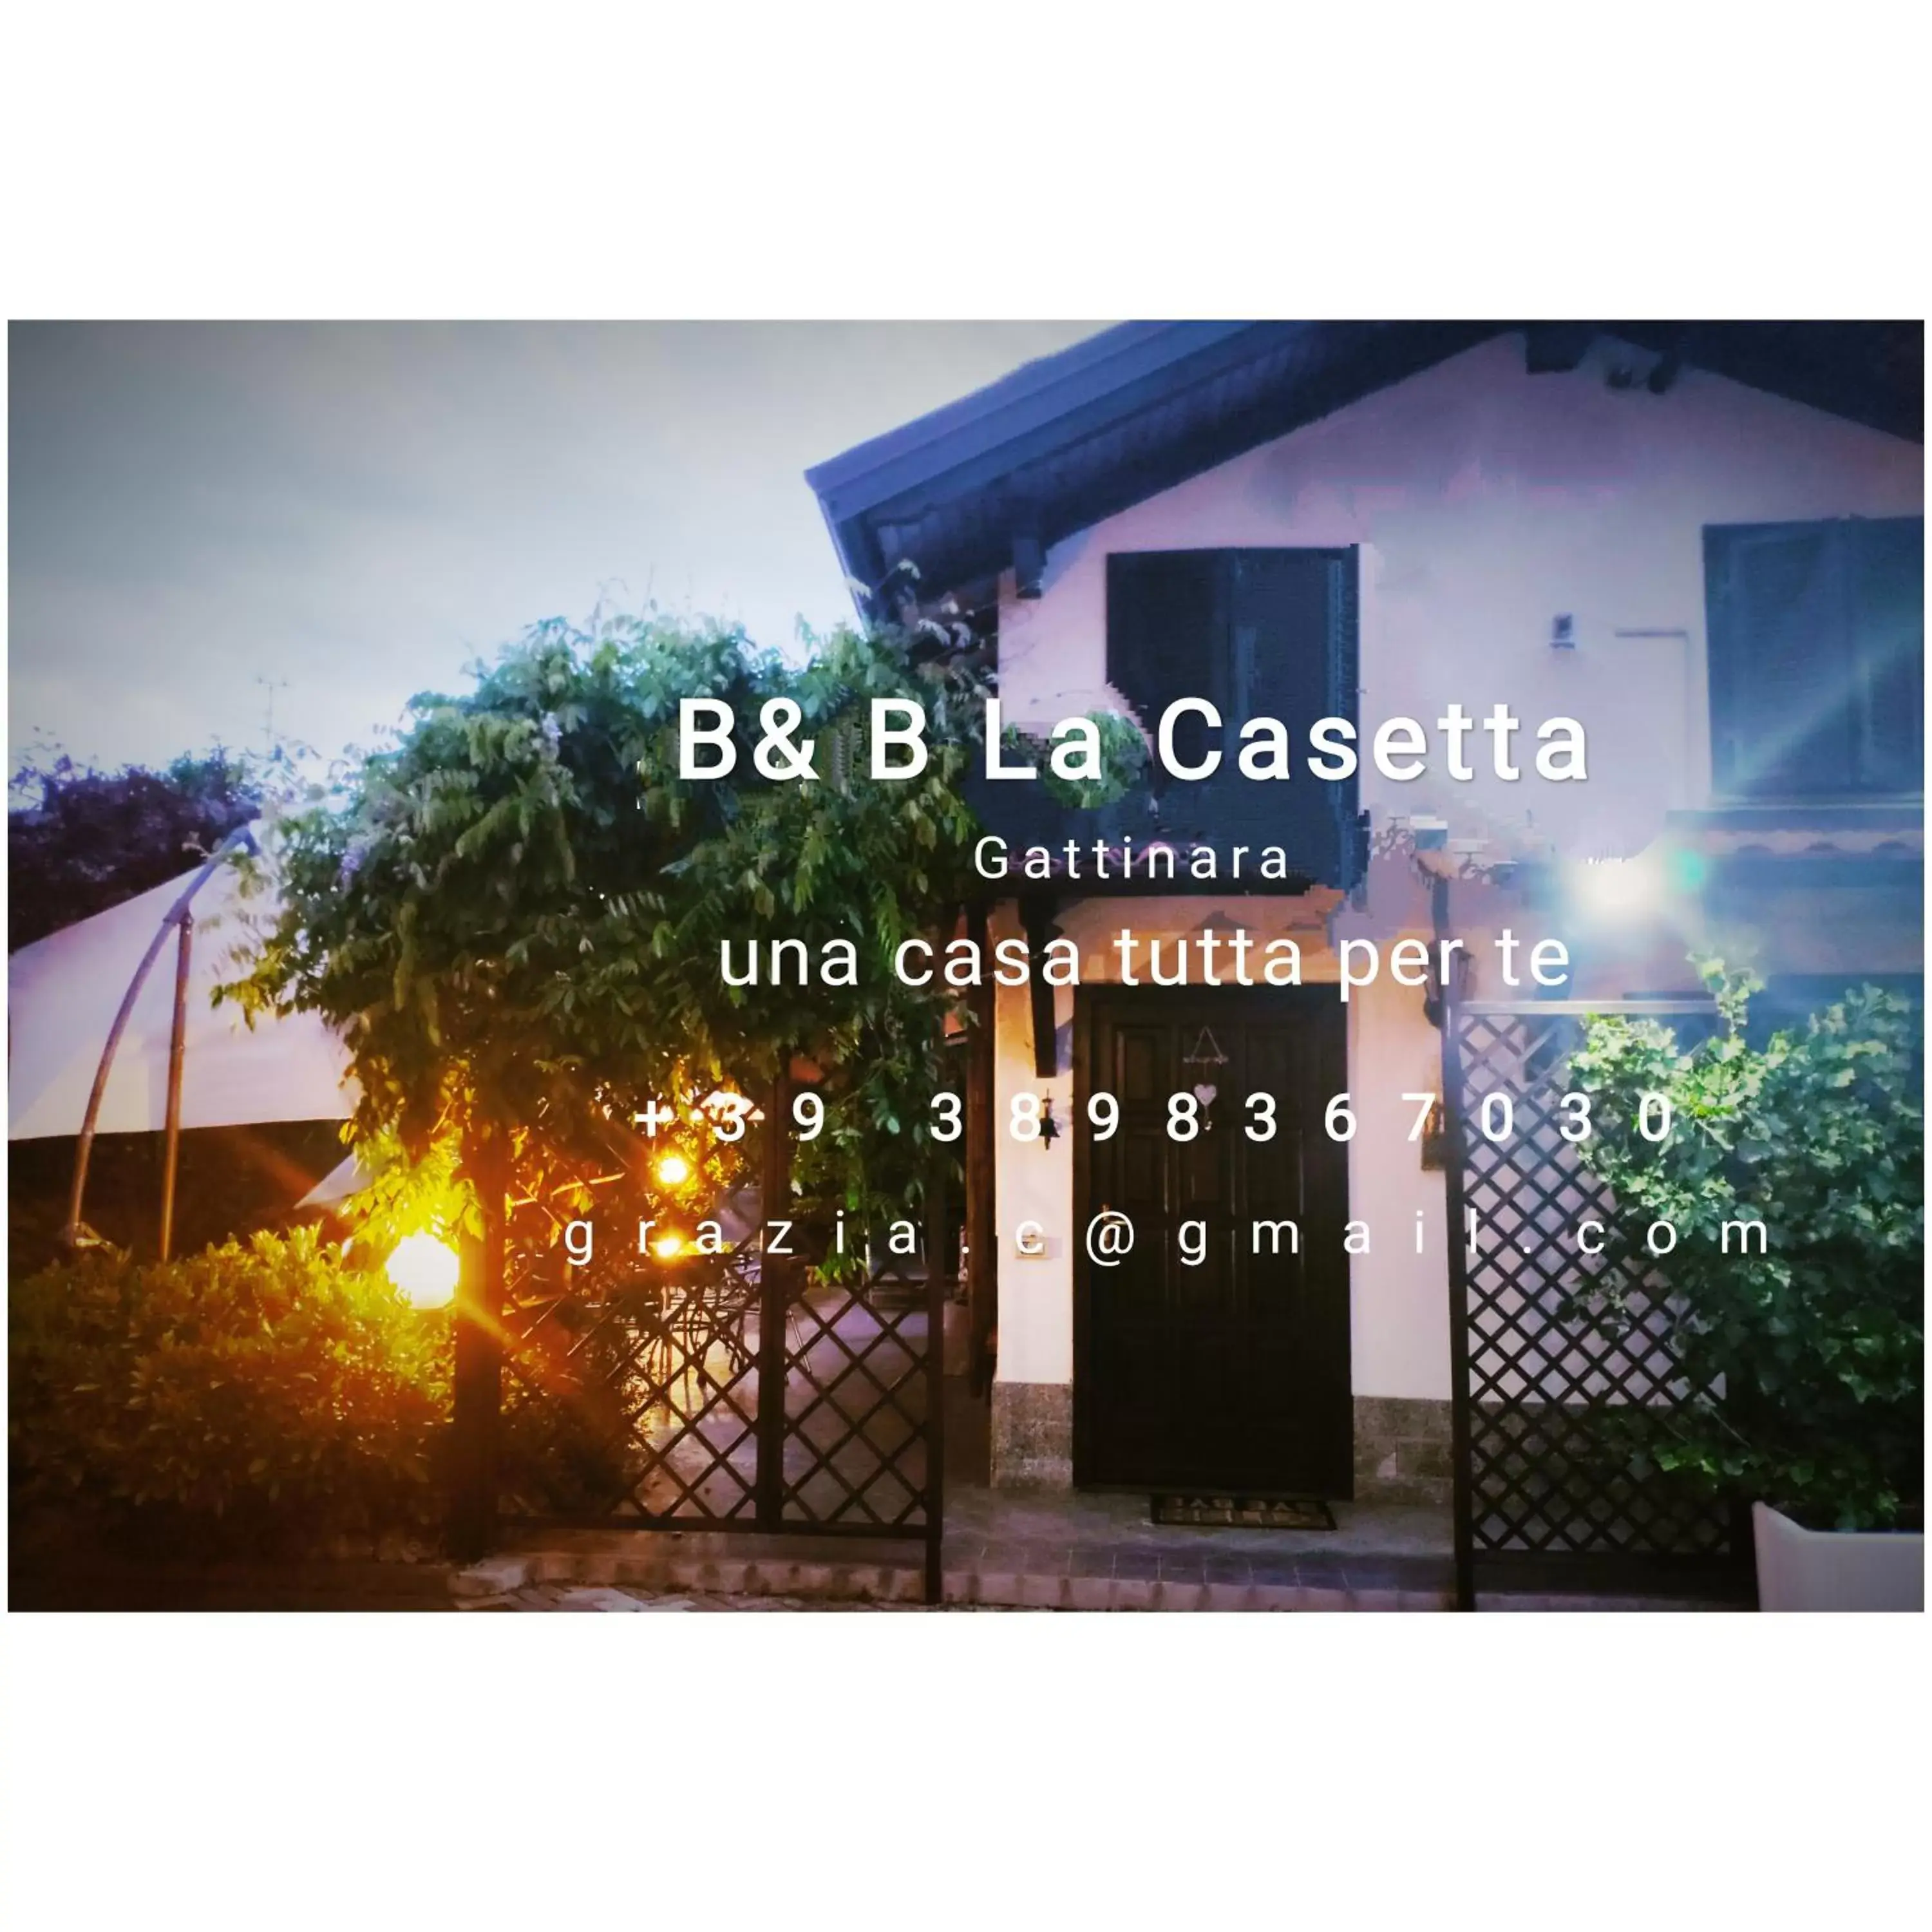 Facade/entrance in B&B La Casetta